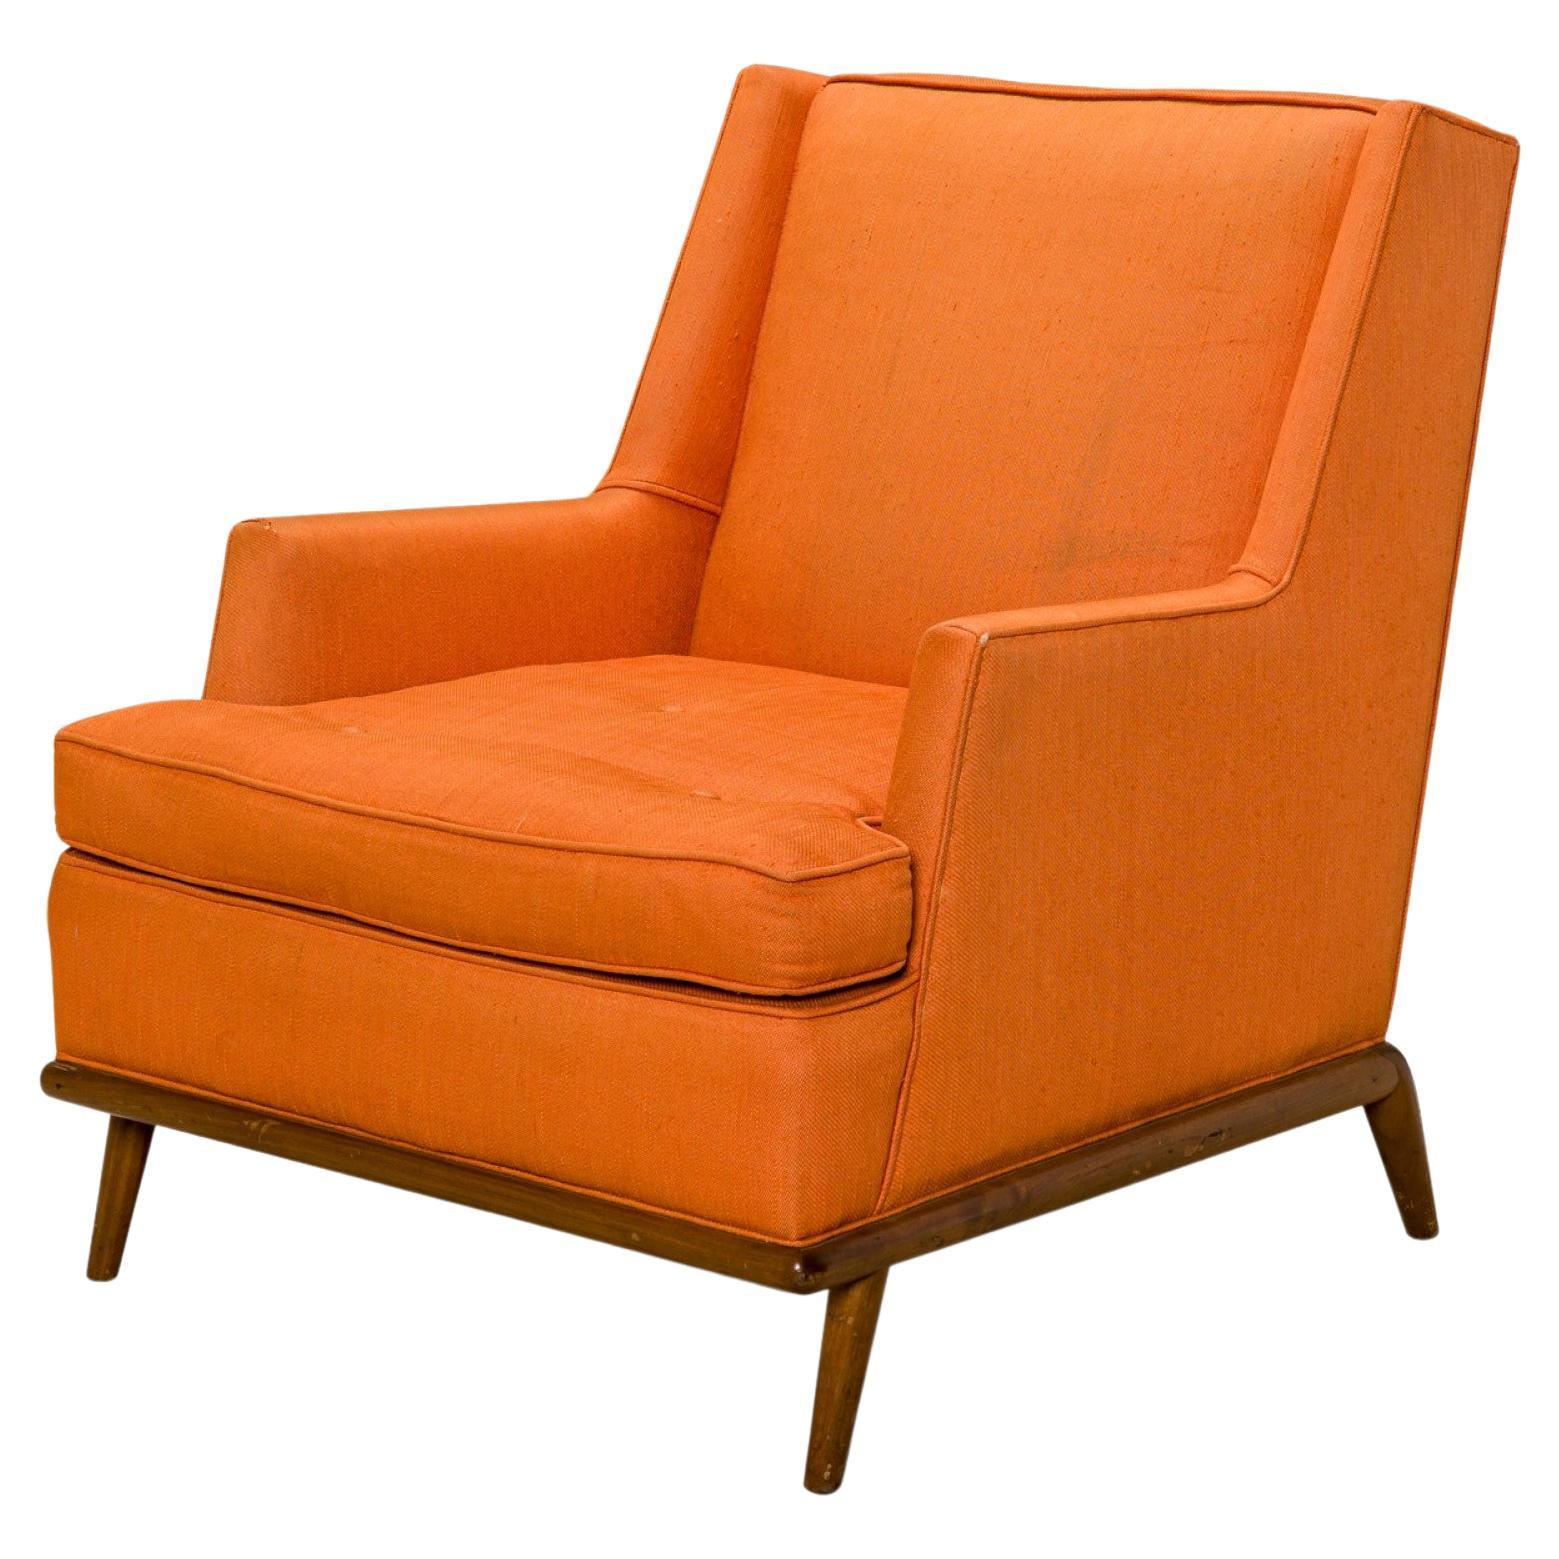 T.H. Robsjohn-Gibbings für Widdicomb, orangefarbener gepolsterter Loungesessel mit hoher Rückenlehne